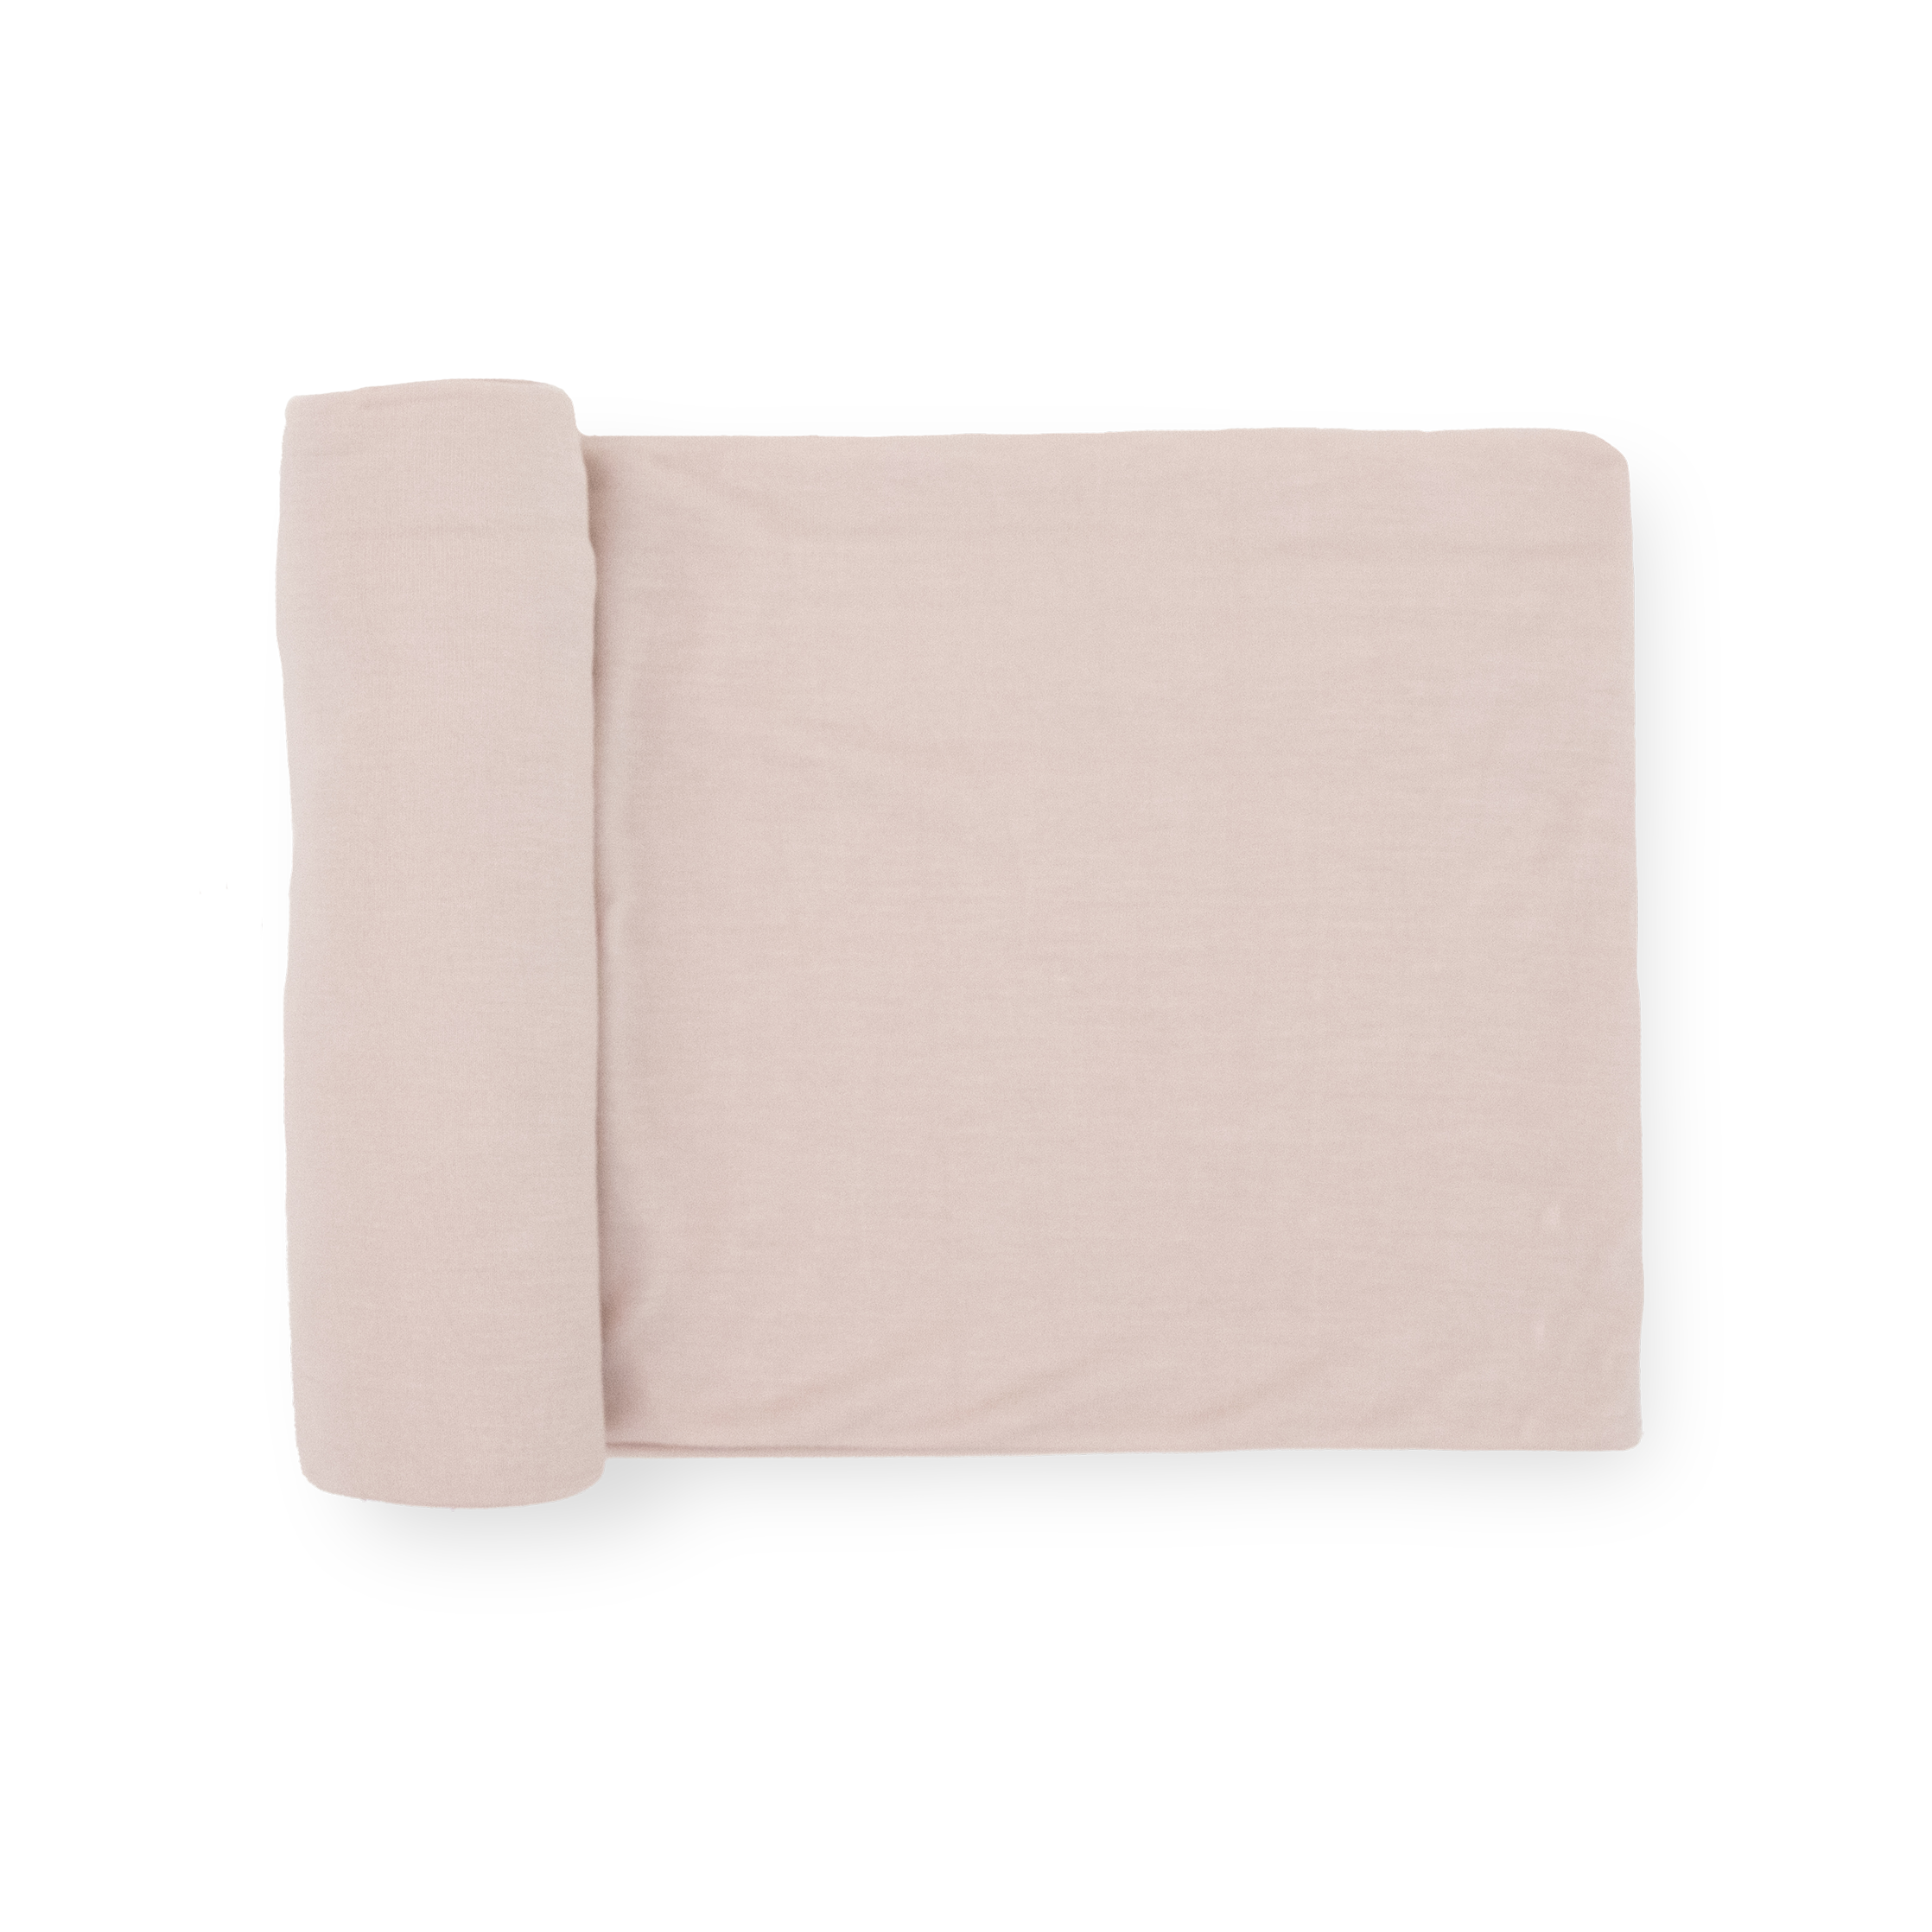 Stretch Knit Swaddle Blanket - Soft Blush